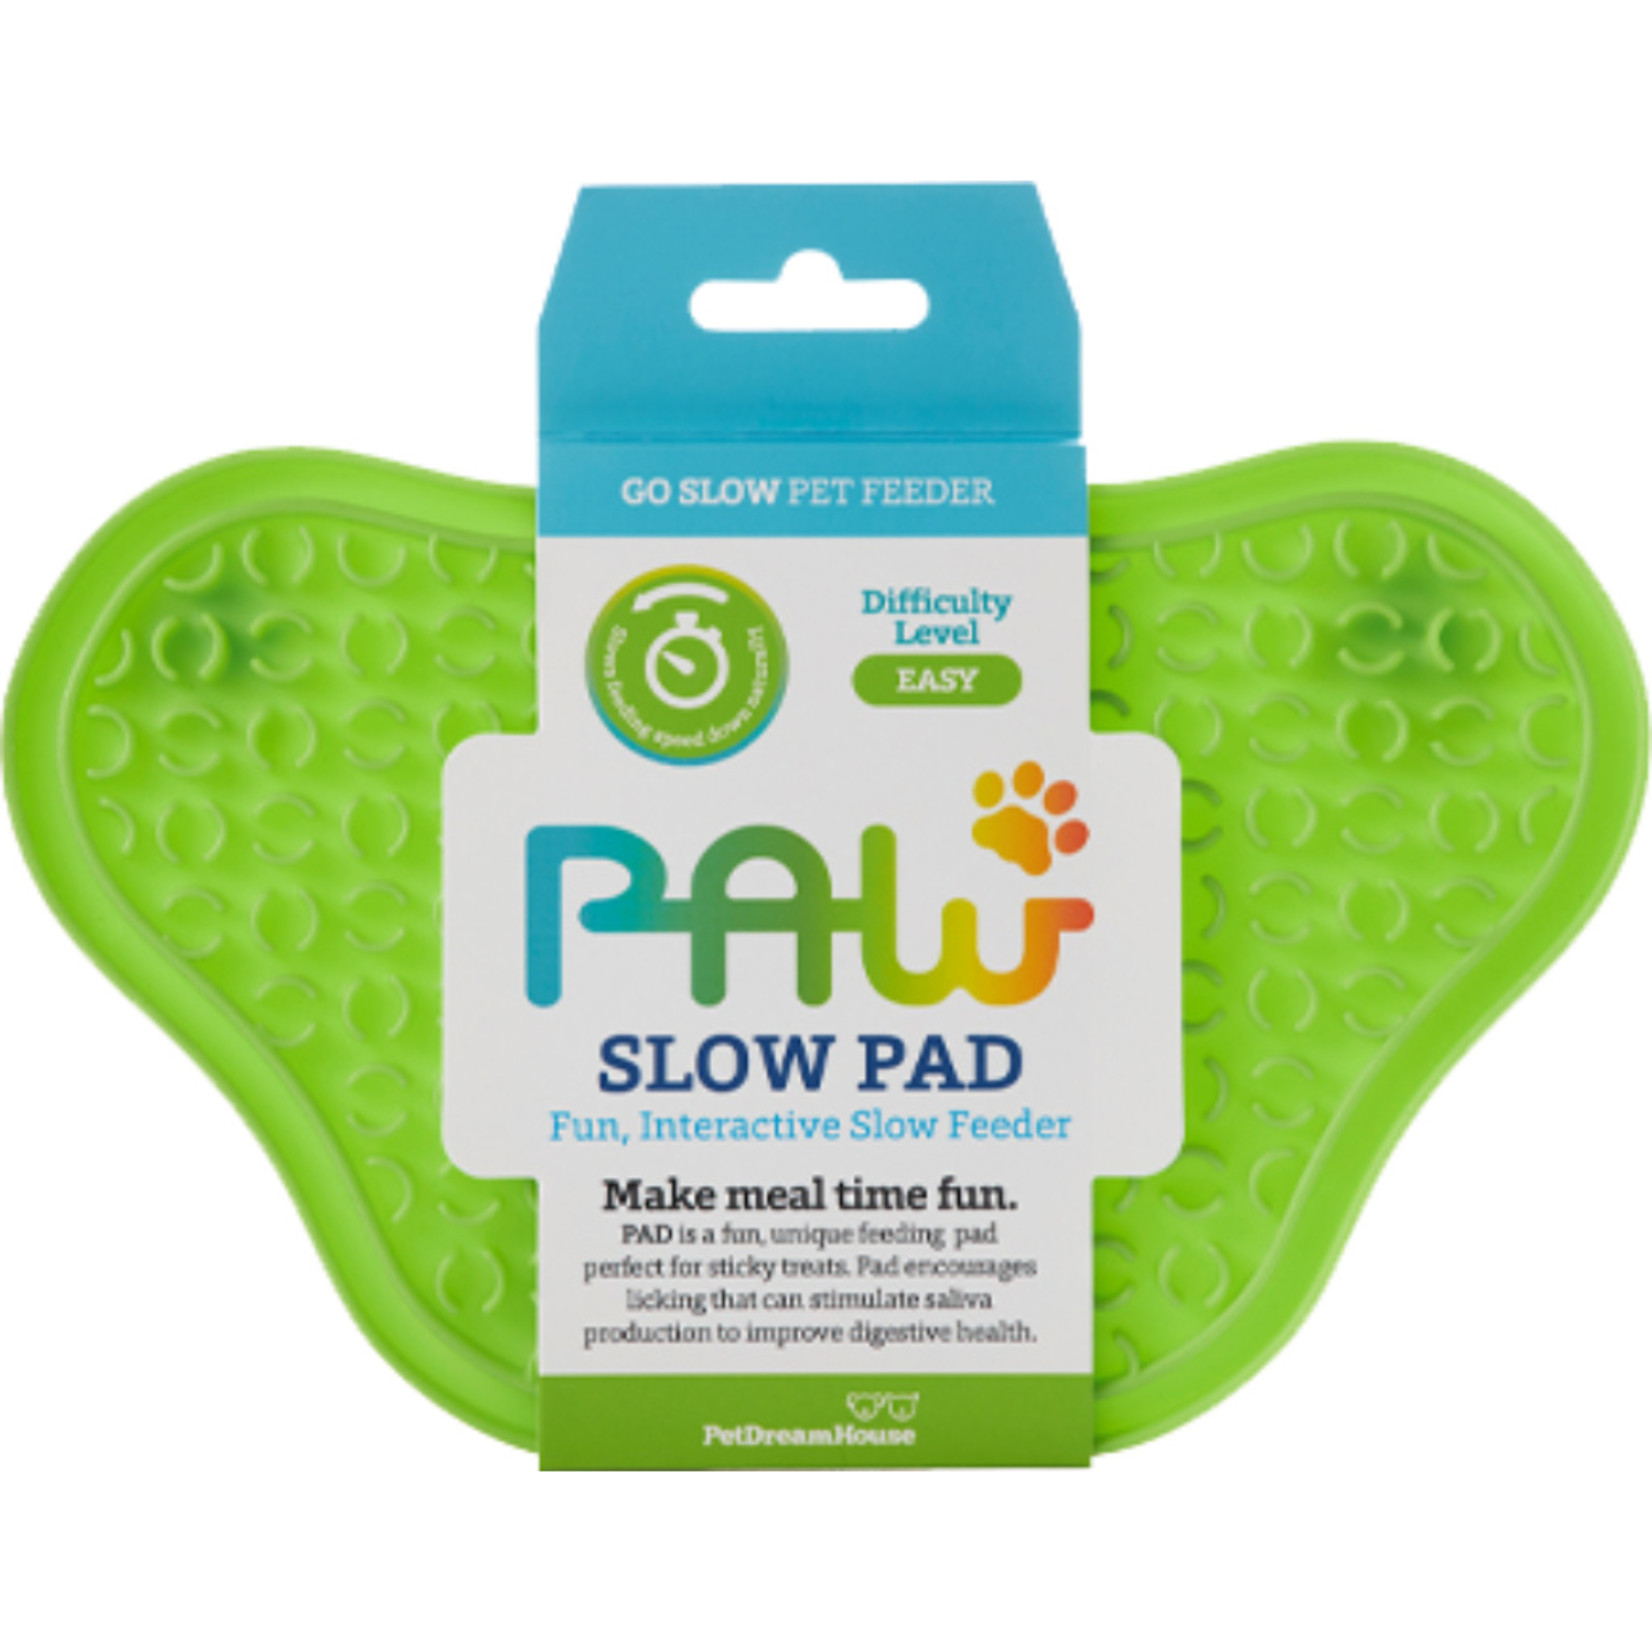 PAW lick slow pad green